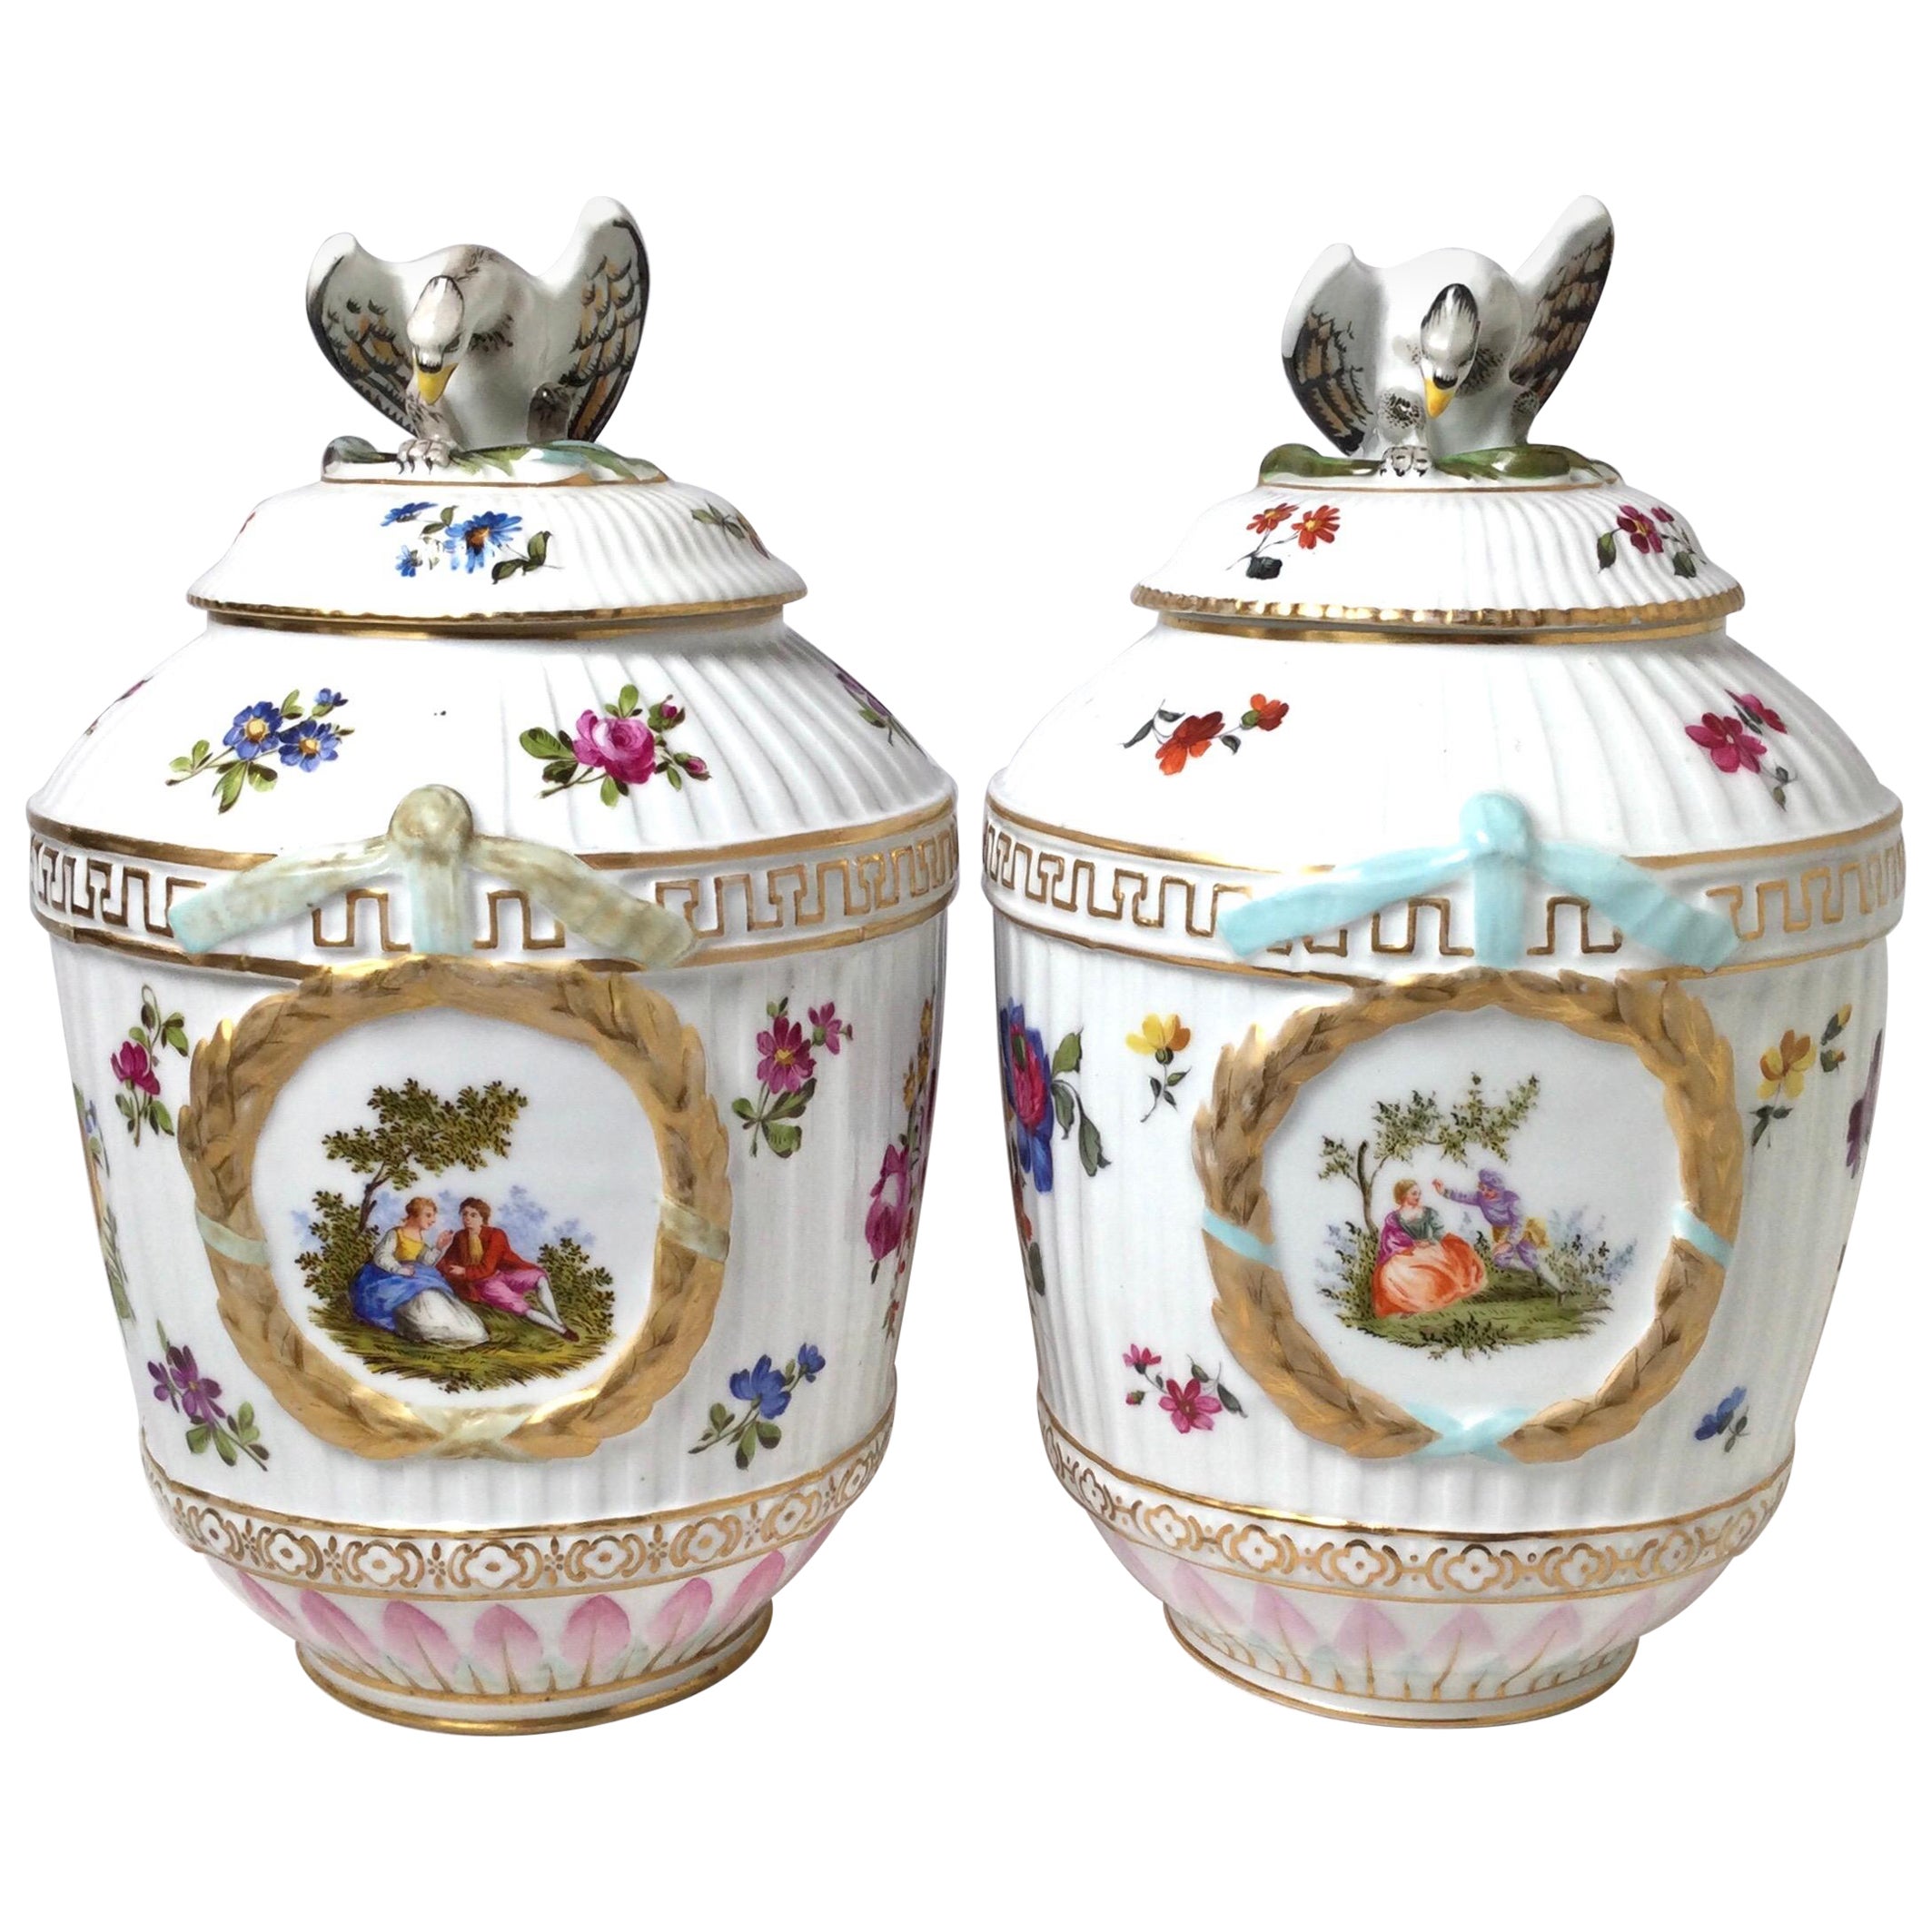 Pair of KPM Porcelain Covered Jars